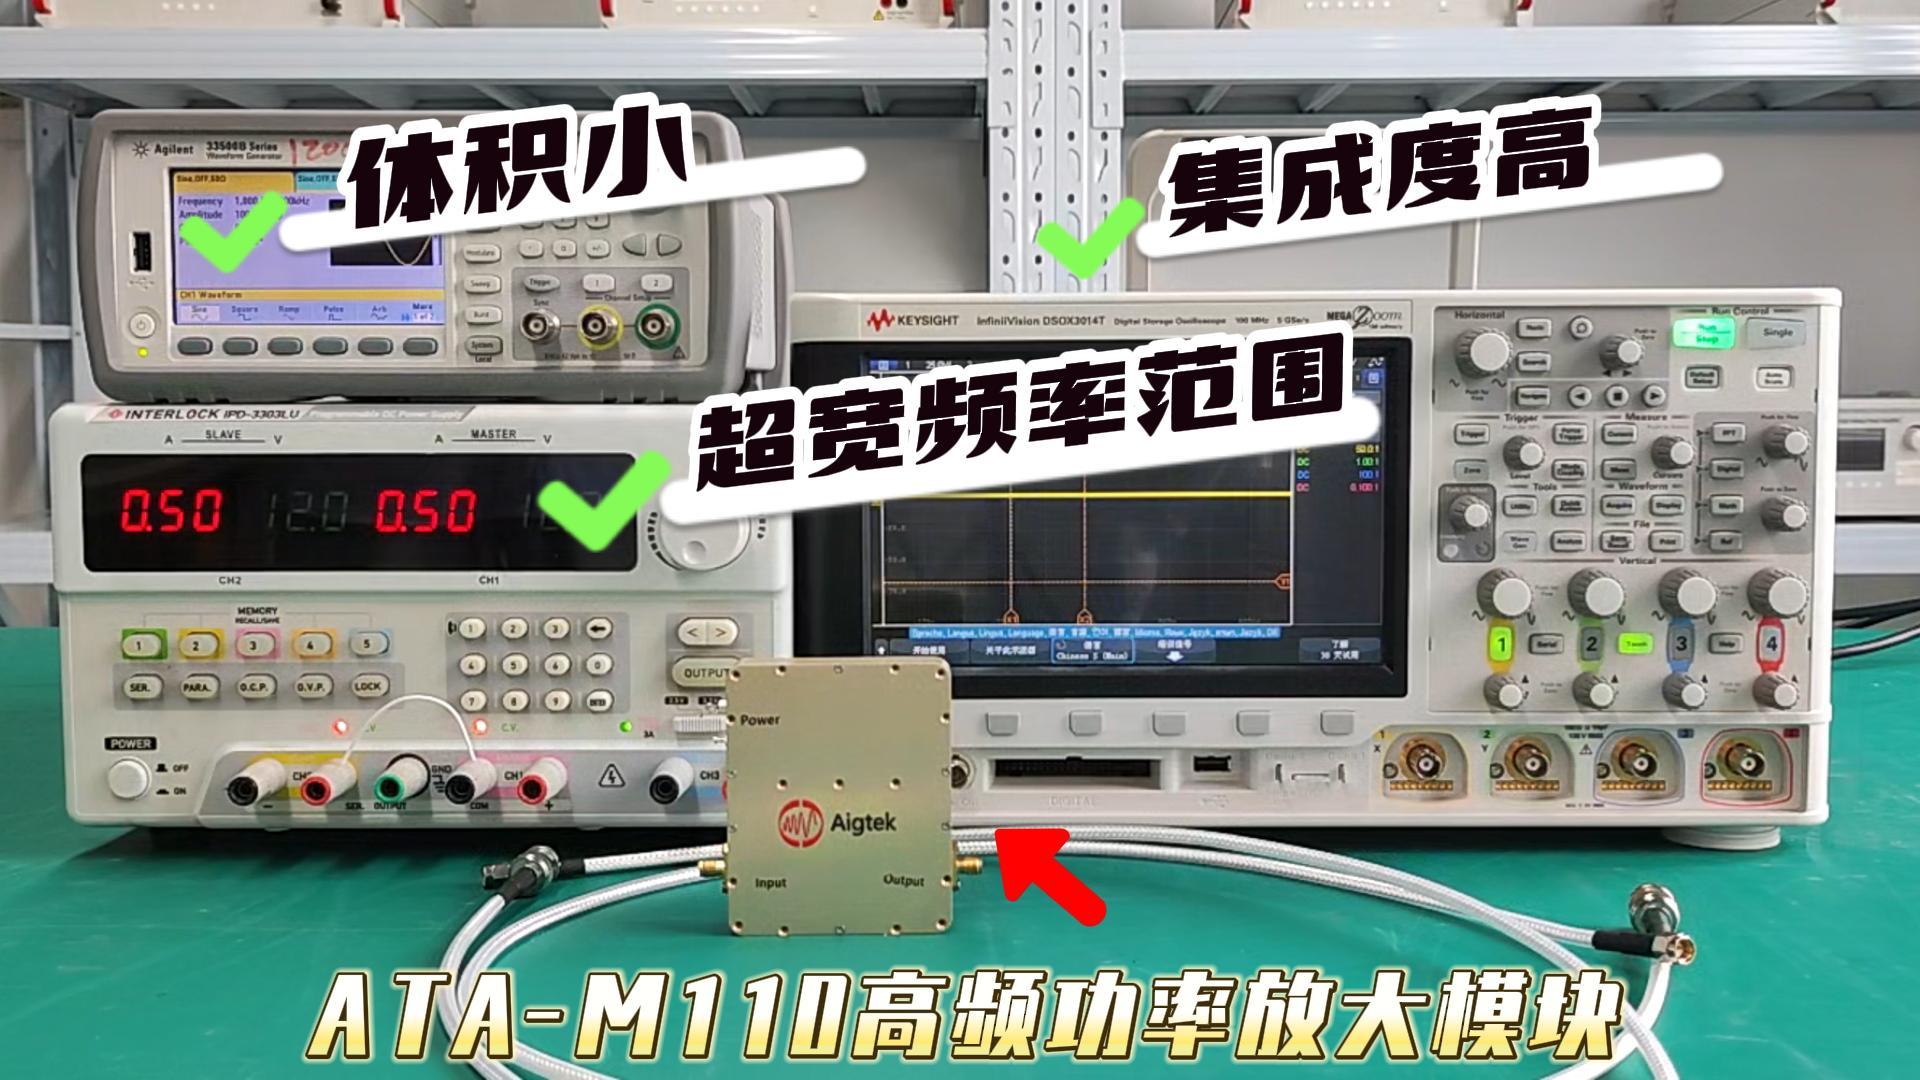 ATA-M110功率放大器模块！体积小，集成度高，兼容性强！#功率放大器 #电路知识 #硬核拆解 #电路原理 